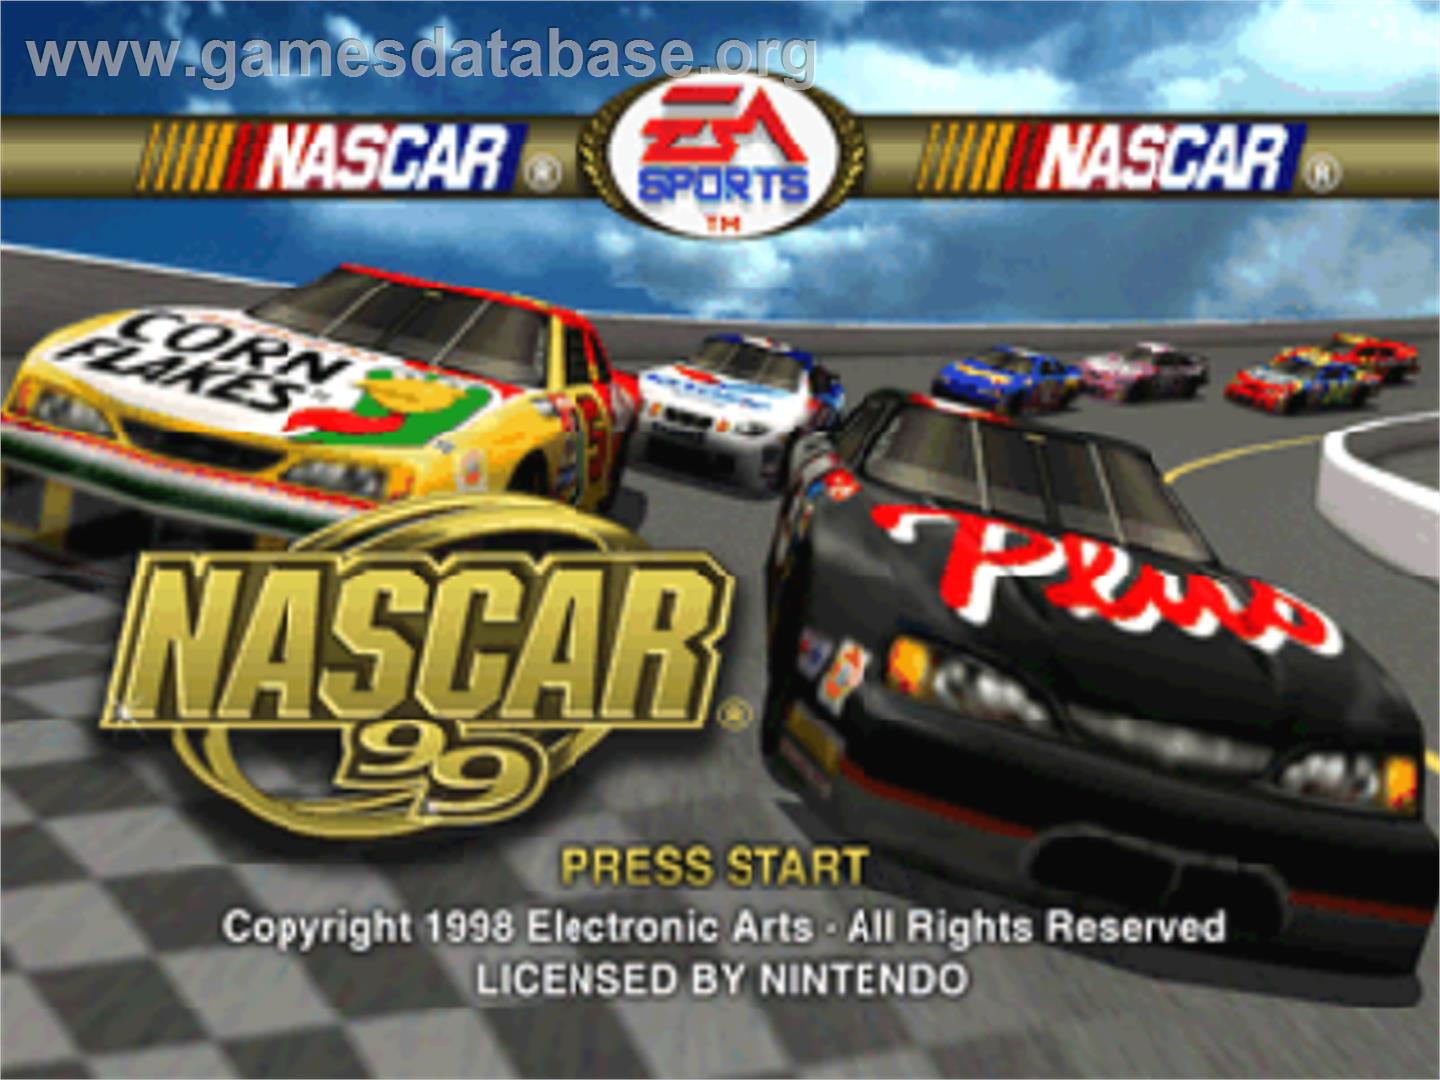 NASCAR 99 - Nintendo N64 - Artwork - Title Screen